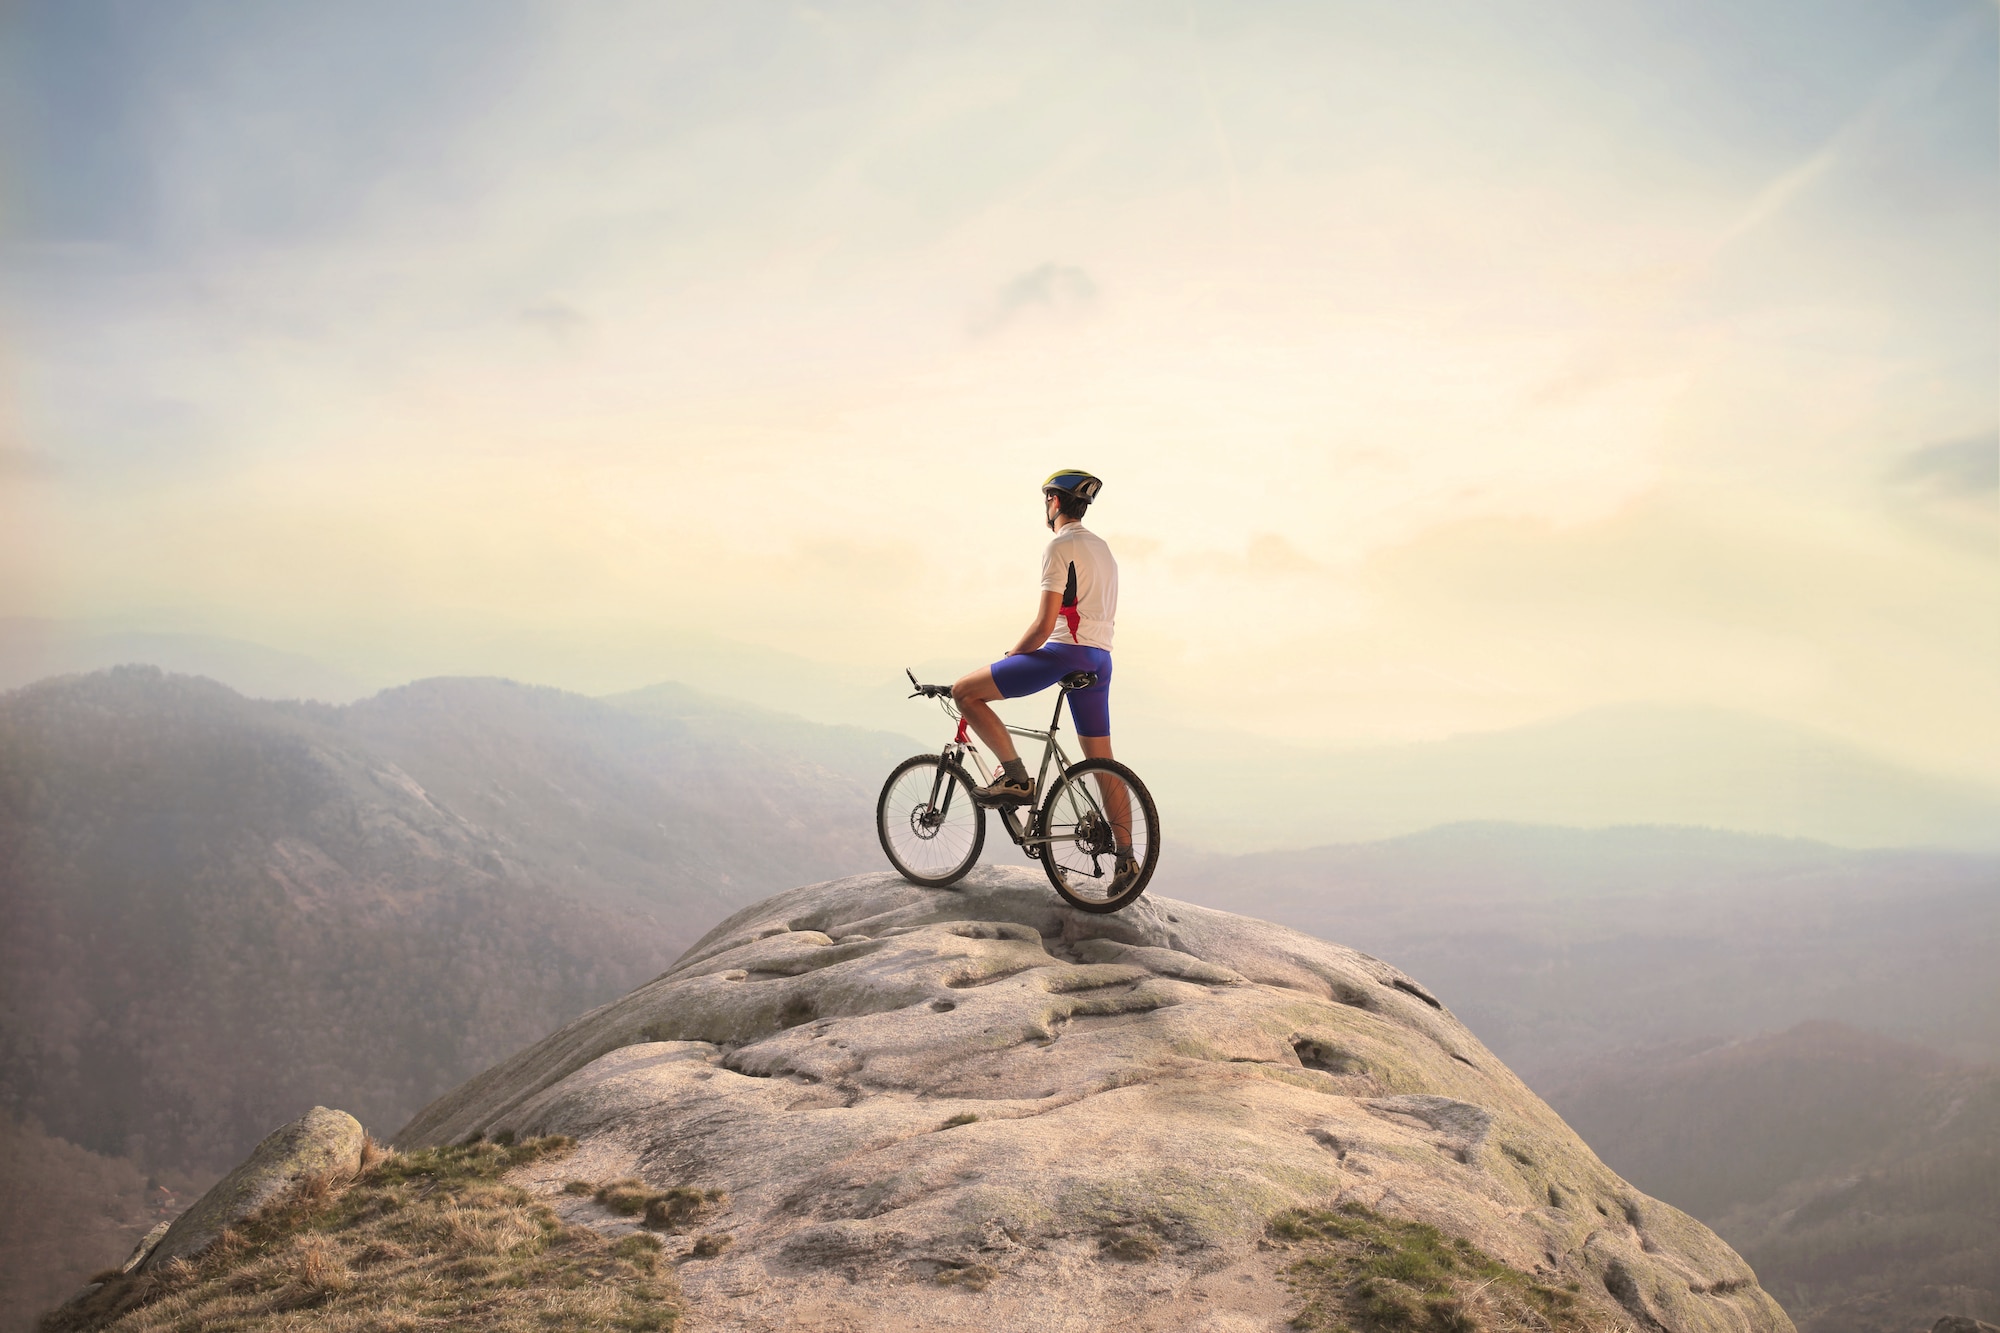 Rider overlooking mountain vista while riding a mountain bike